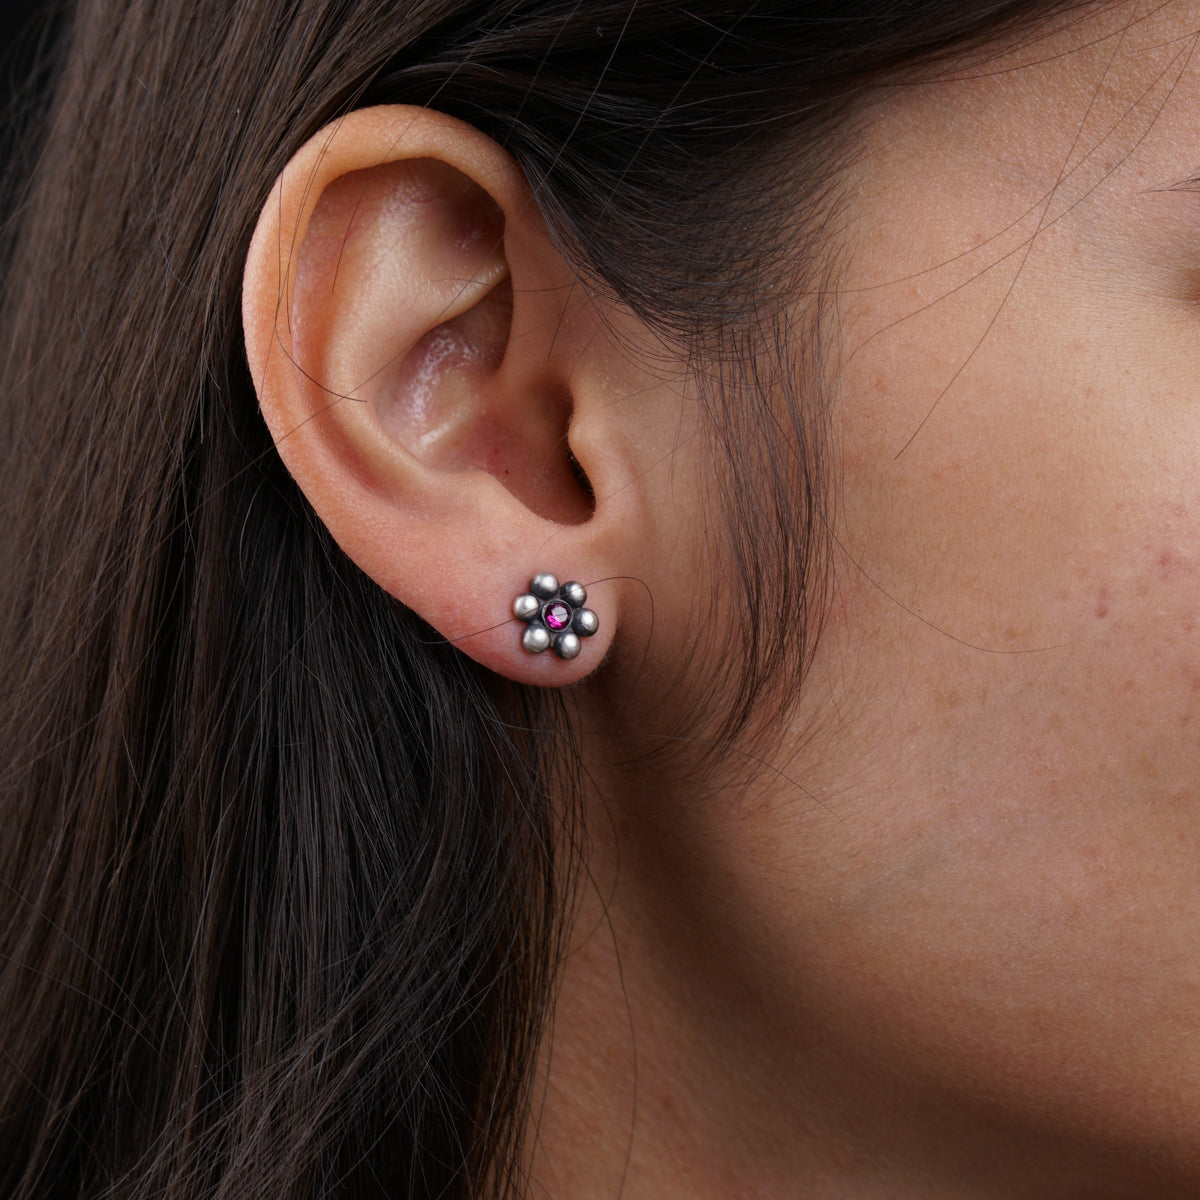 Kudi with pink stone earrings - Small